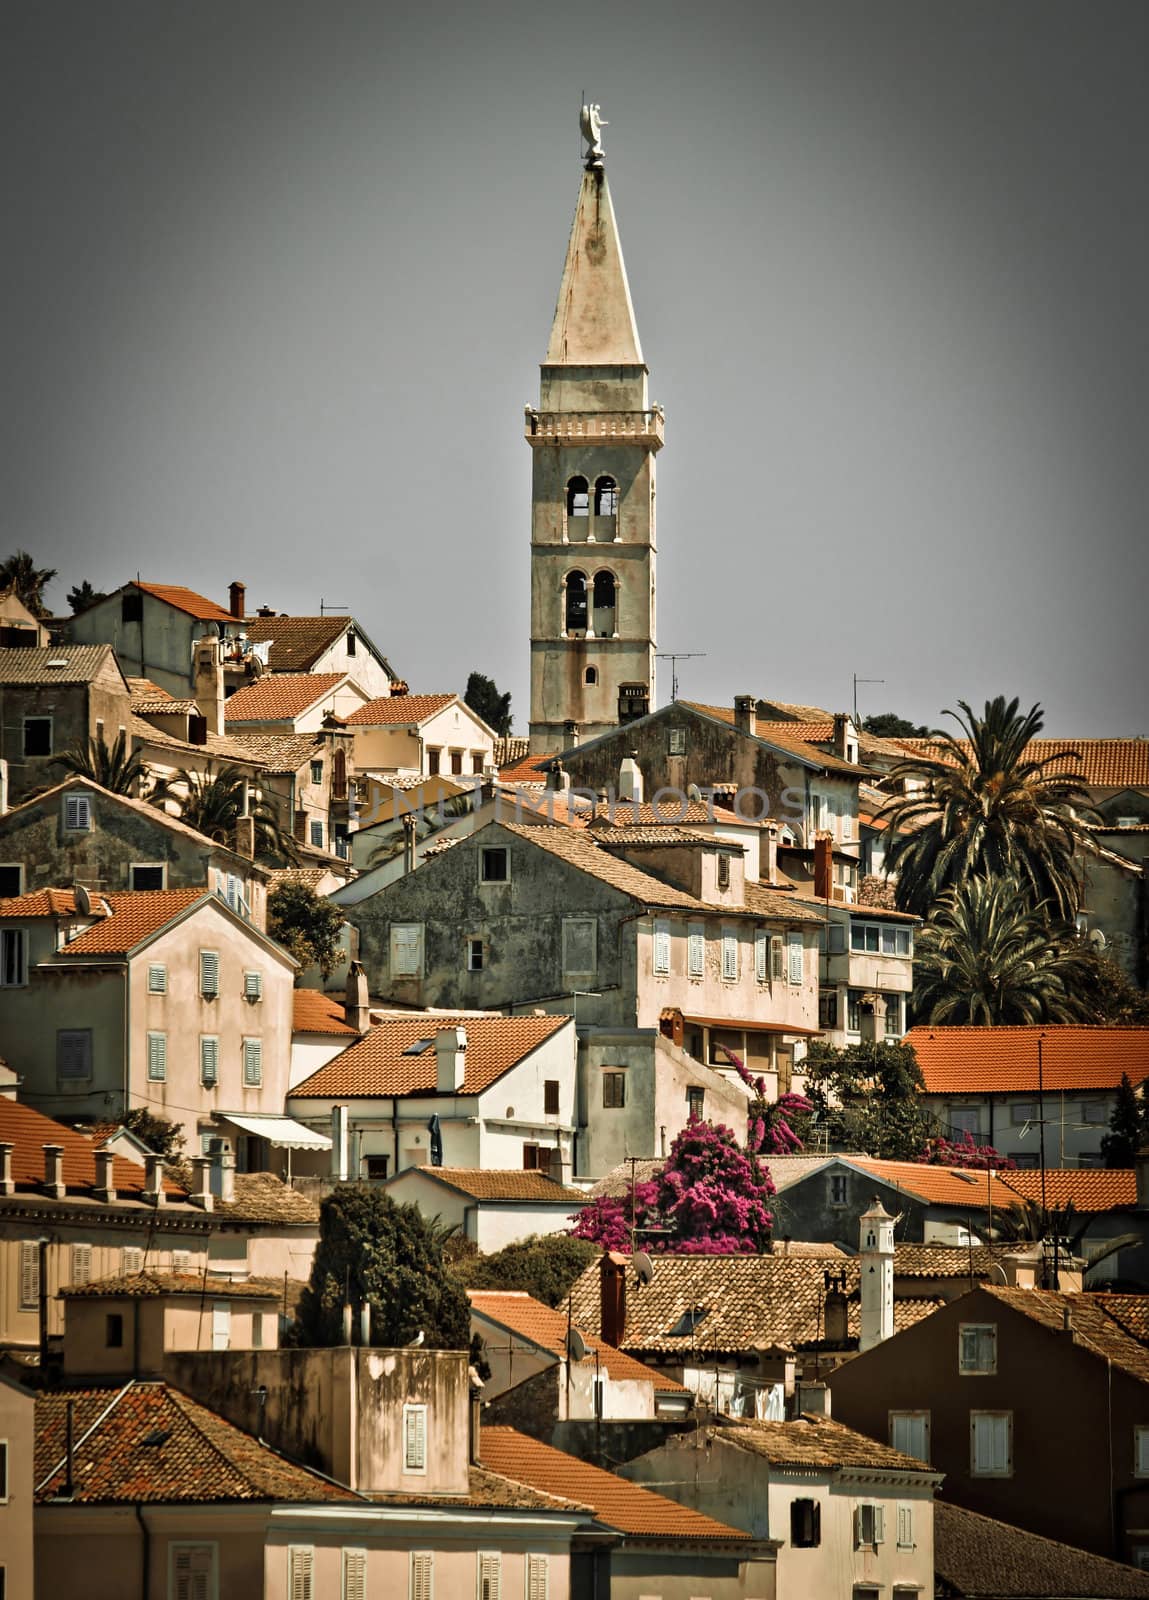 Beautiful town of Mali Losinj, Croatia - vertical view